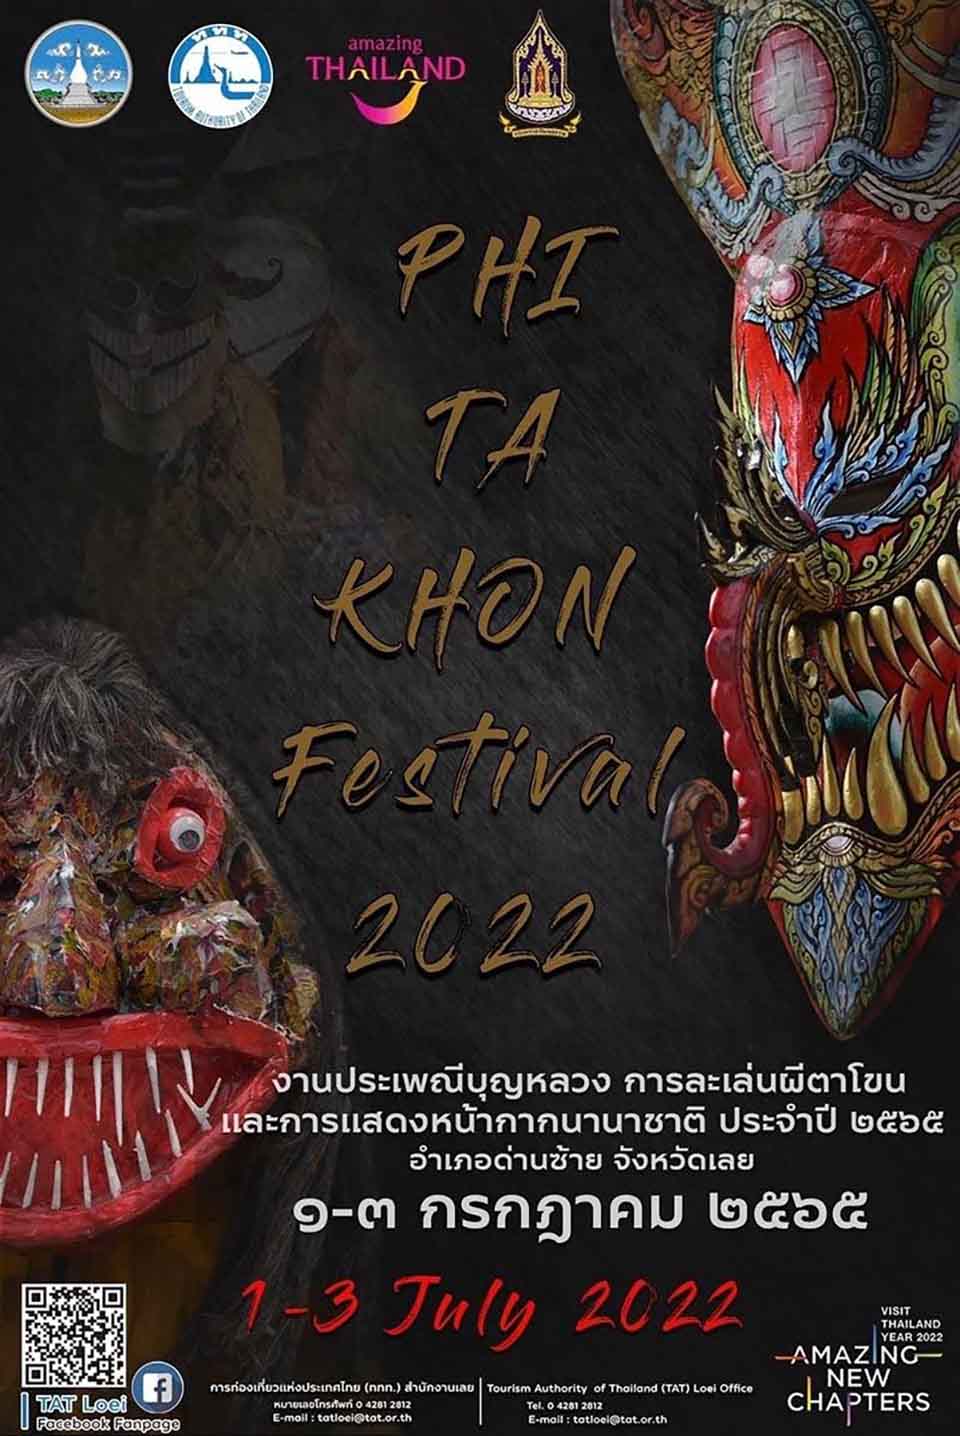 north thailand festival 